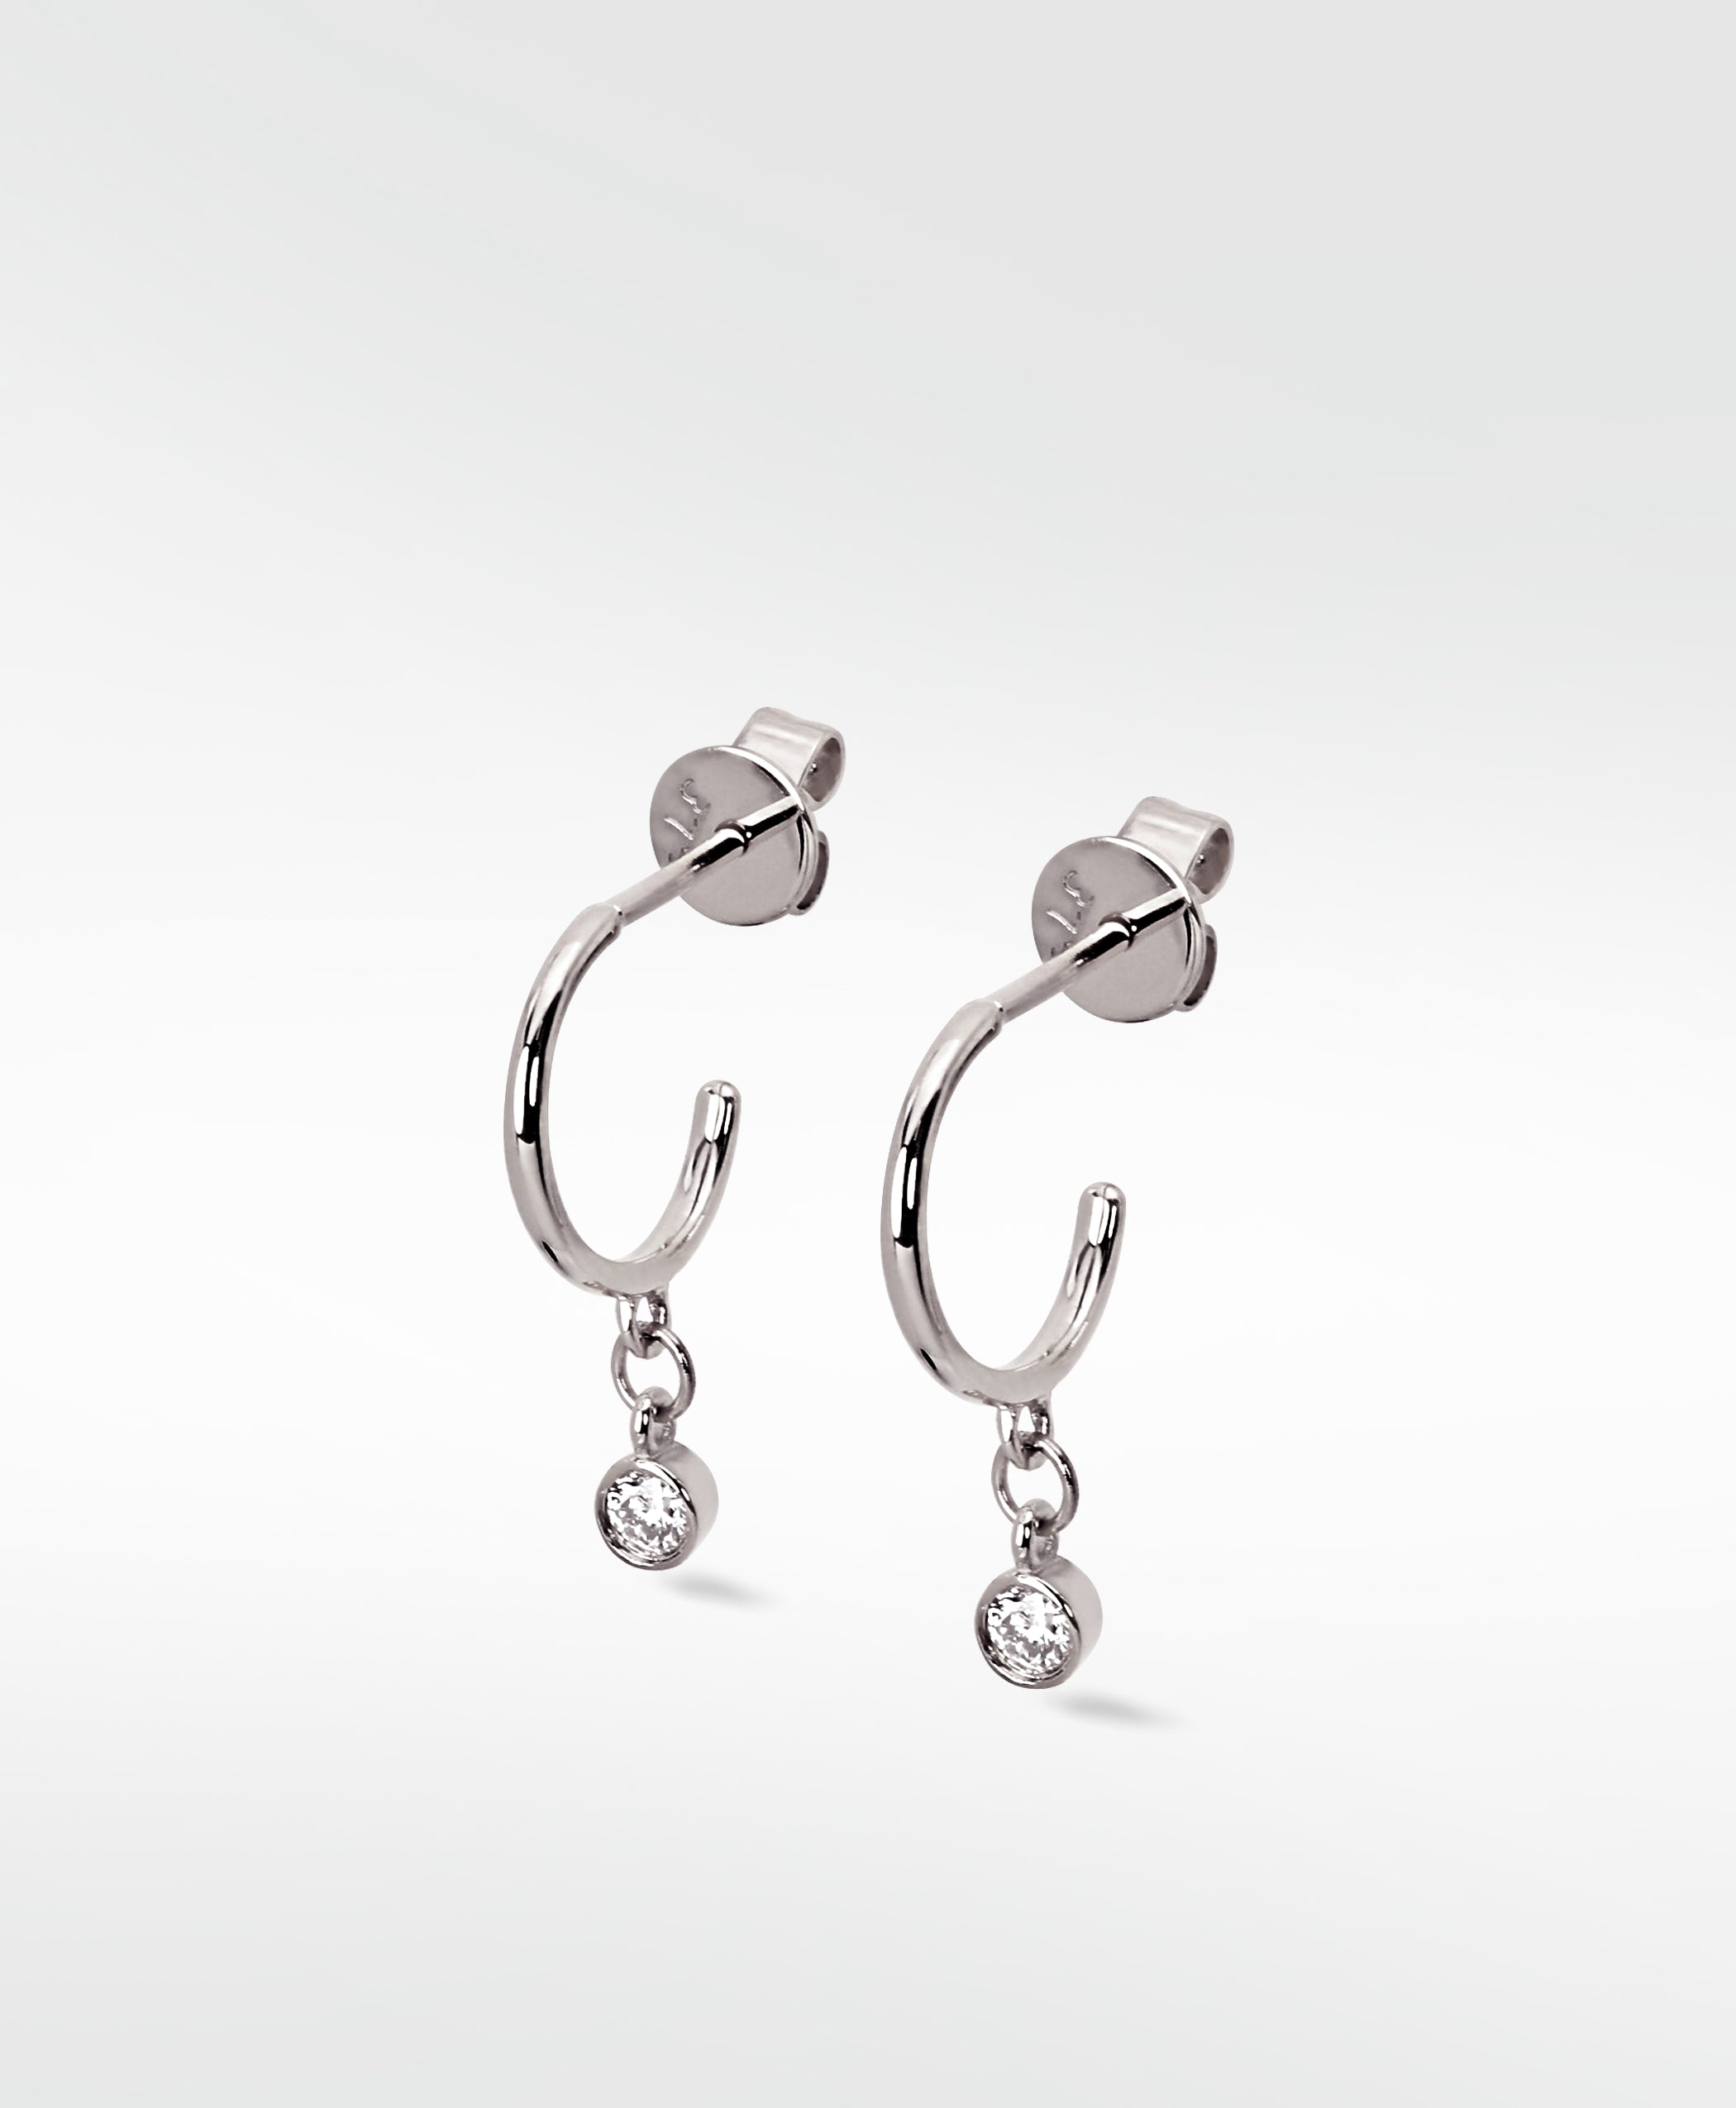 Cherry Blossom Silver Hook Earrings